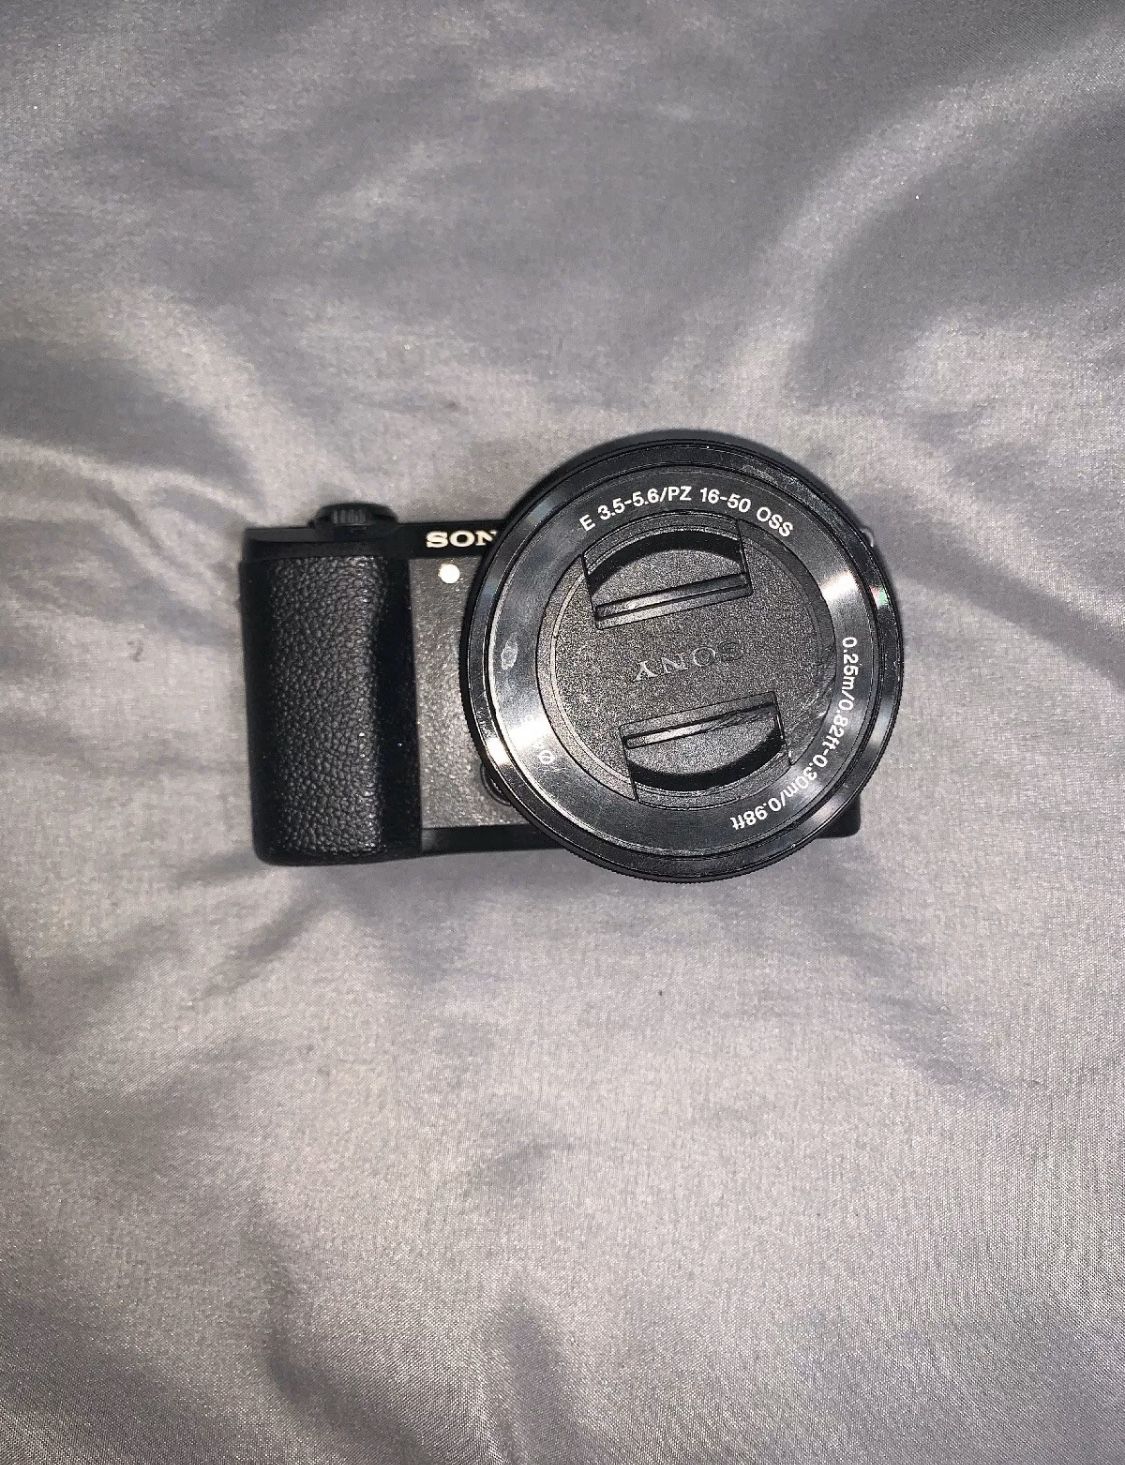 Sony Alpha A5100 24.3MP Digital SLR Camera with E PZ OSS 16-50mm Lens - Black